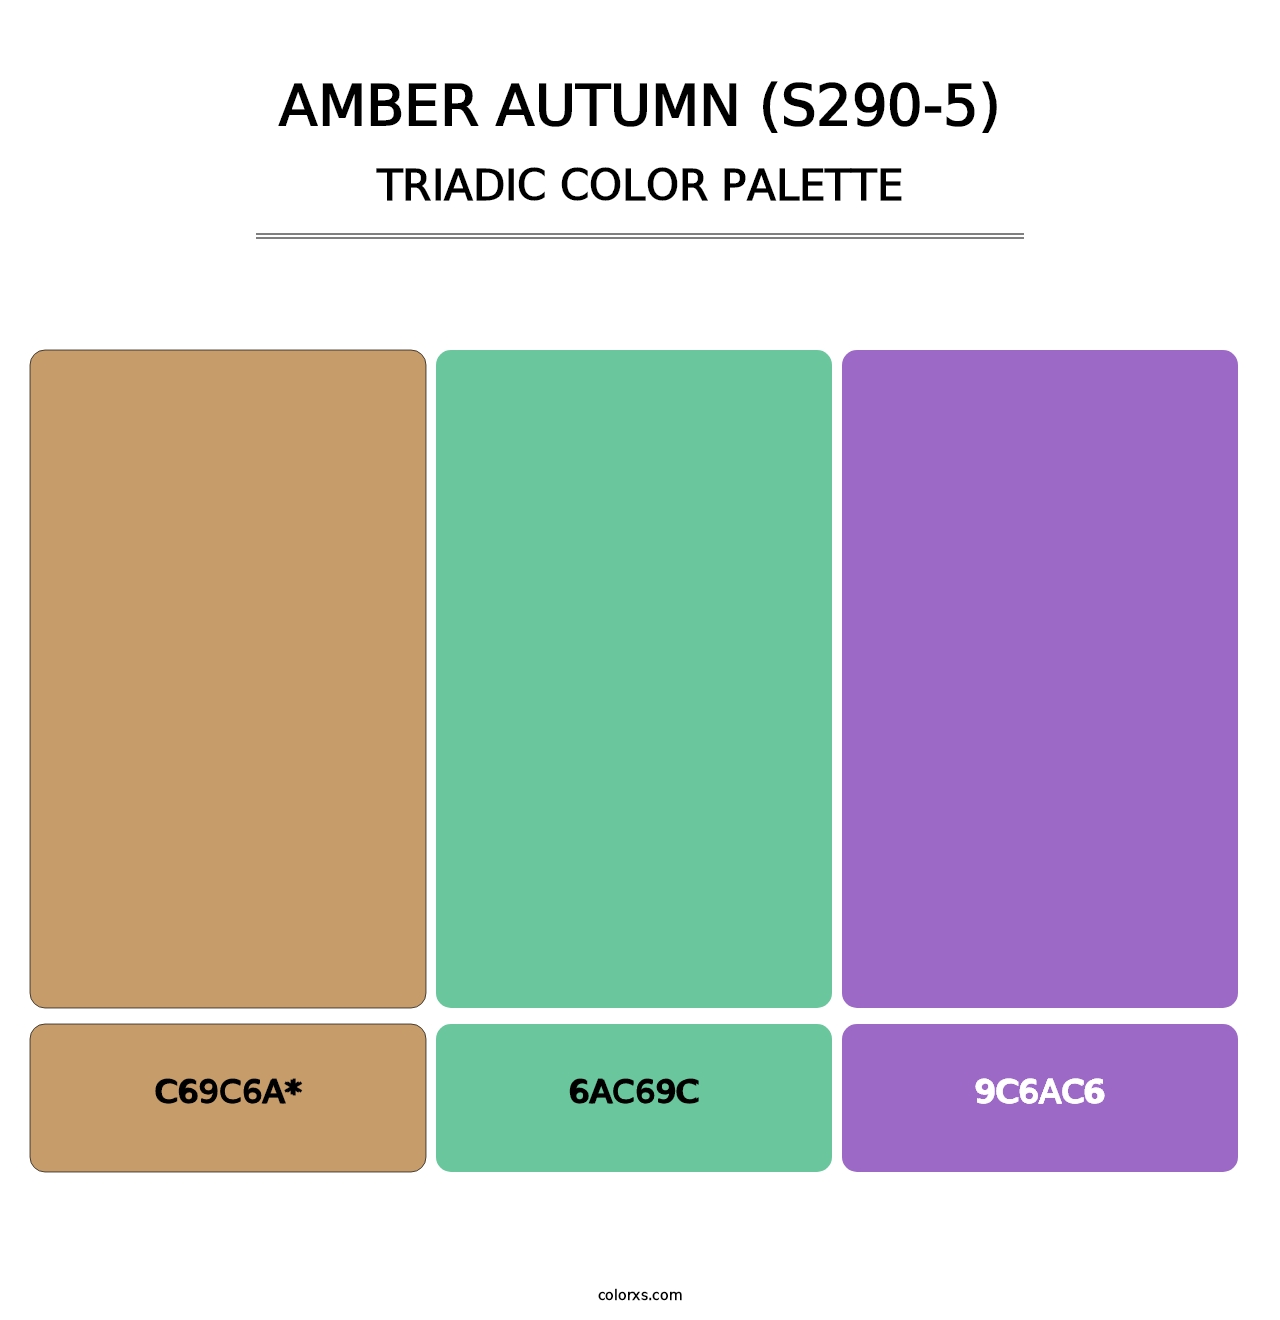 Amber Autumn (S290-5) - Triadic Color Palette